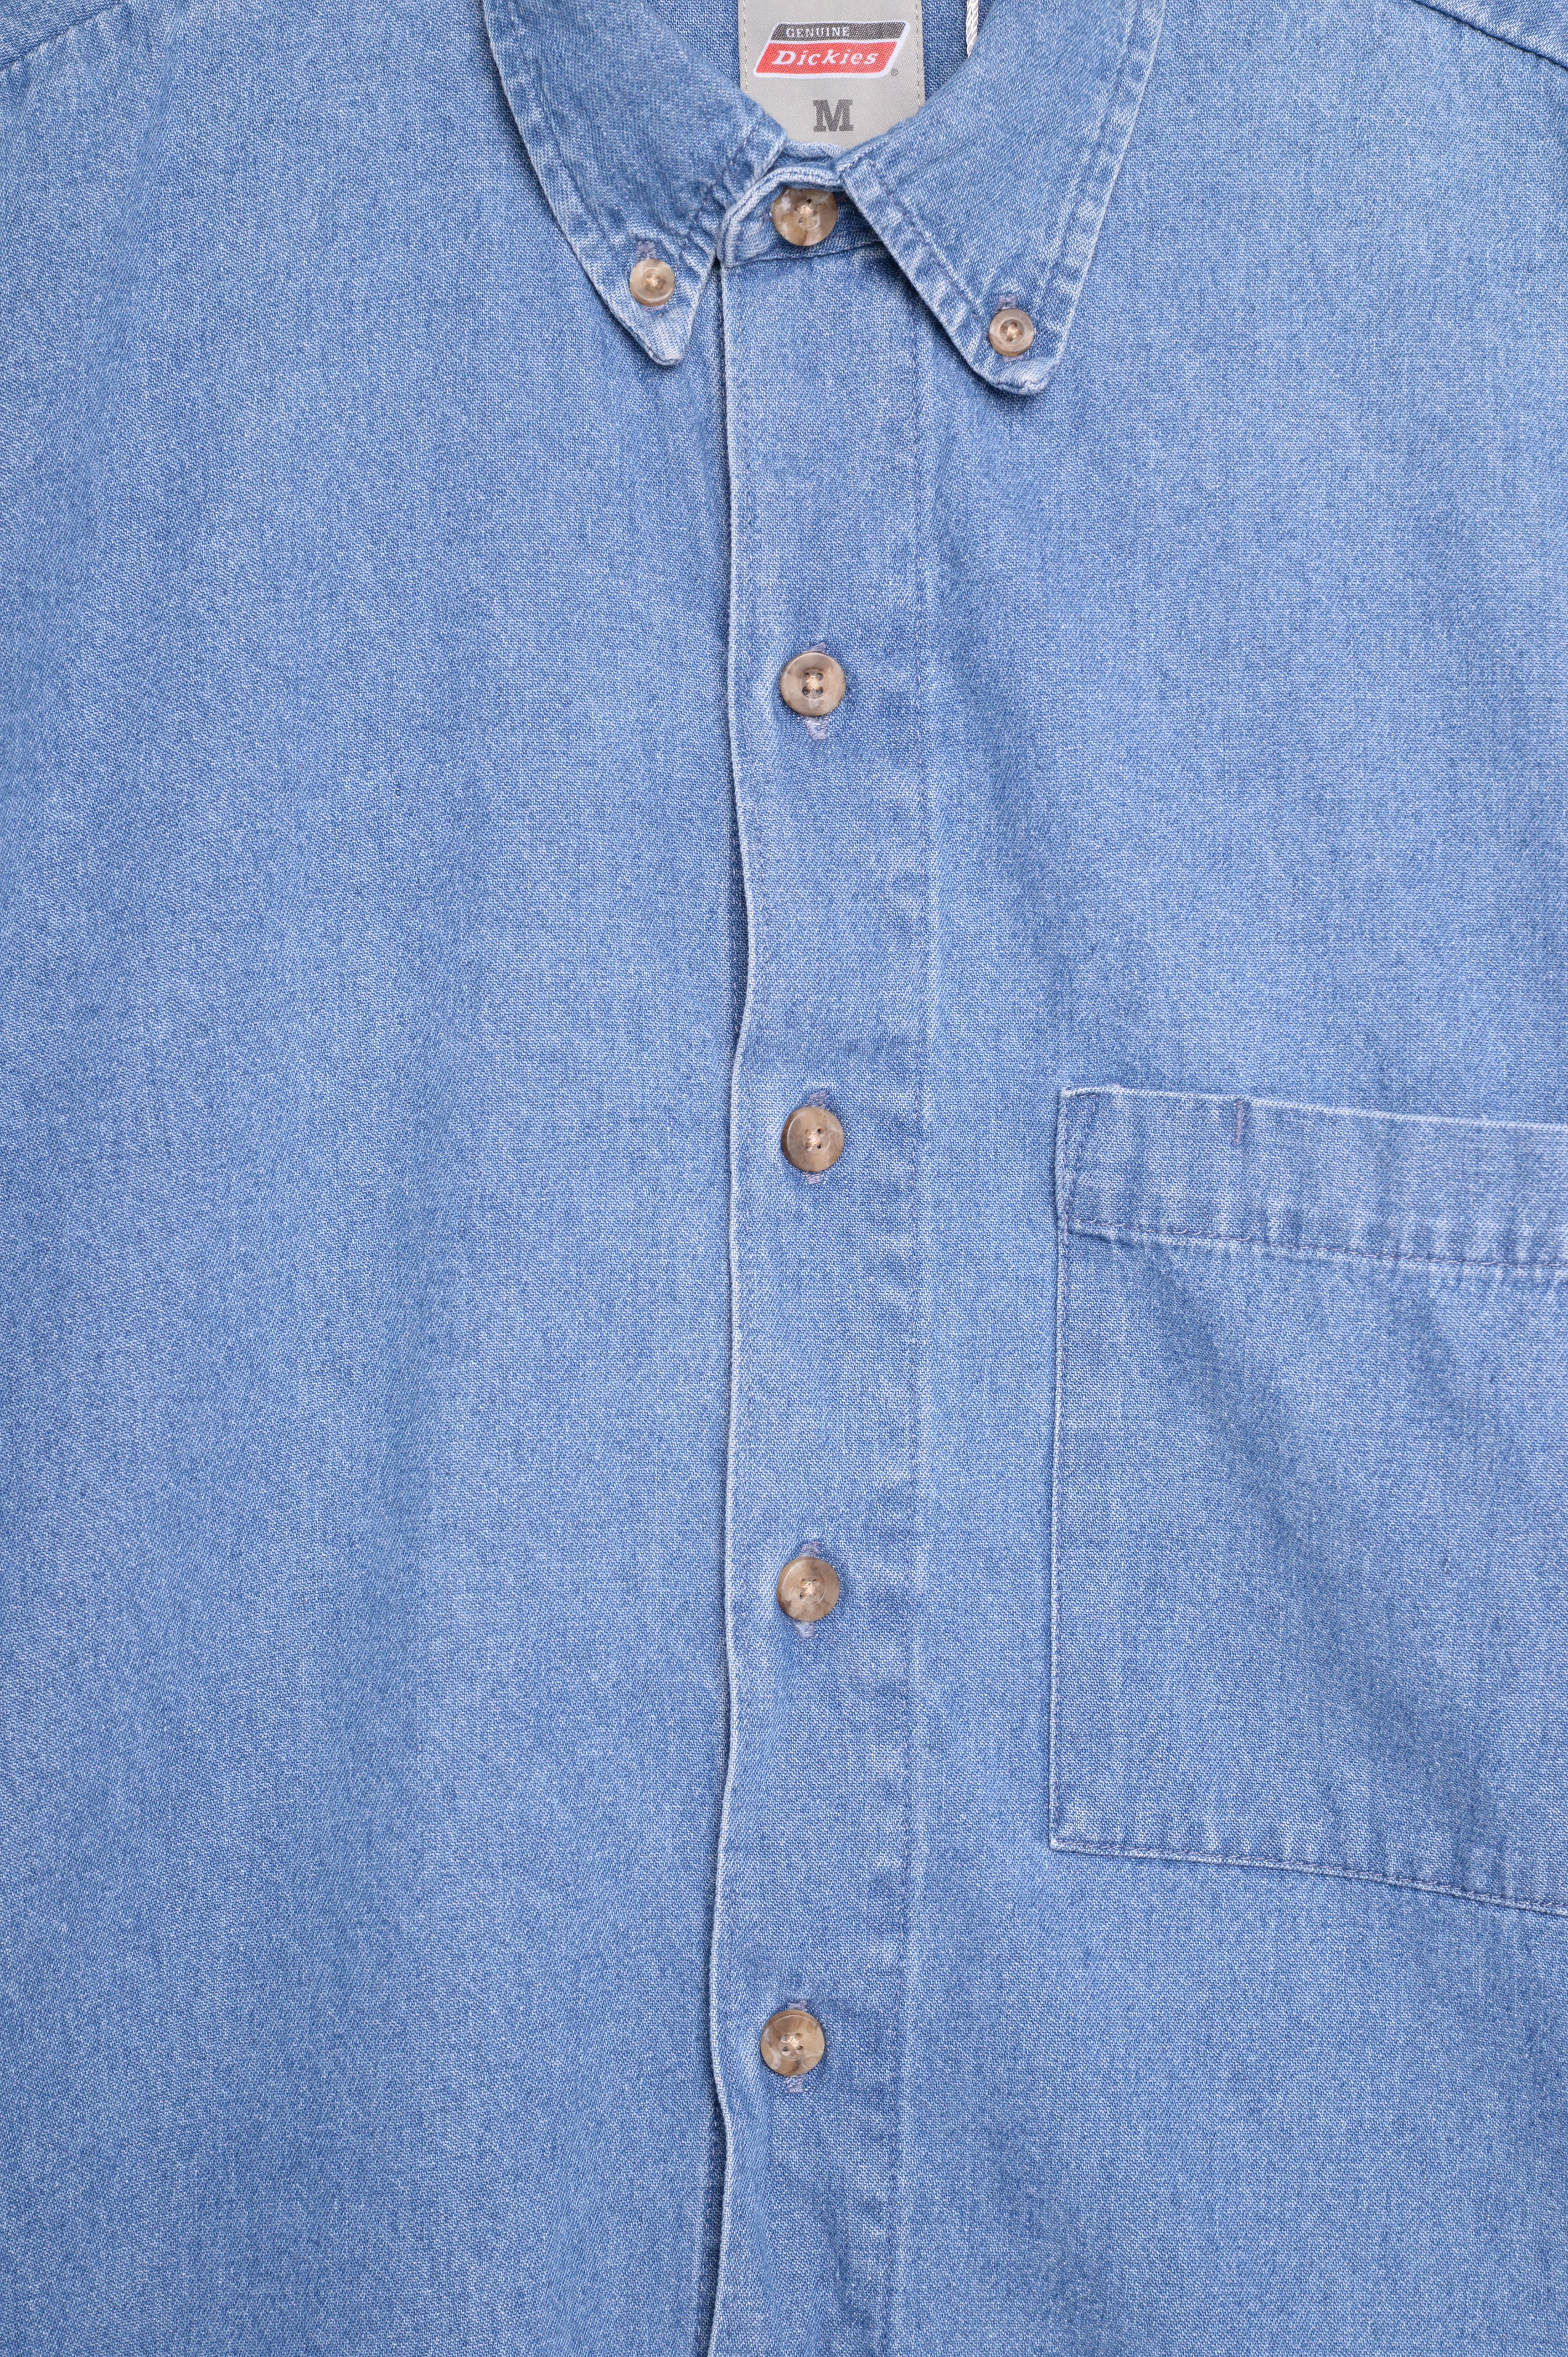 Dickies Denim Shirt – The Vintage Twin